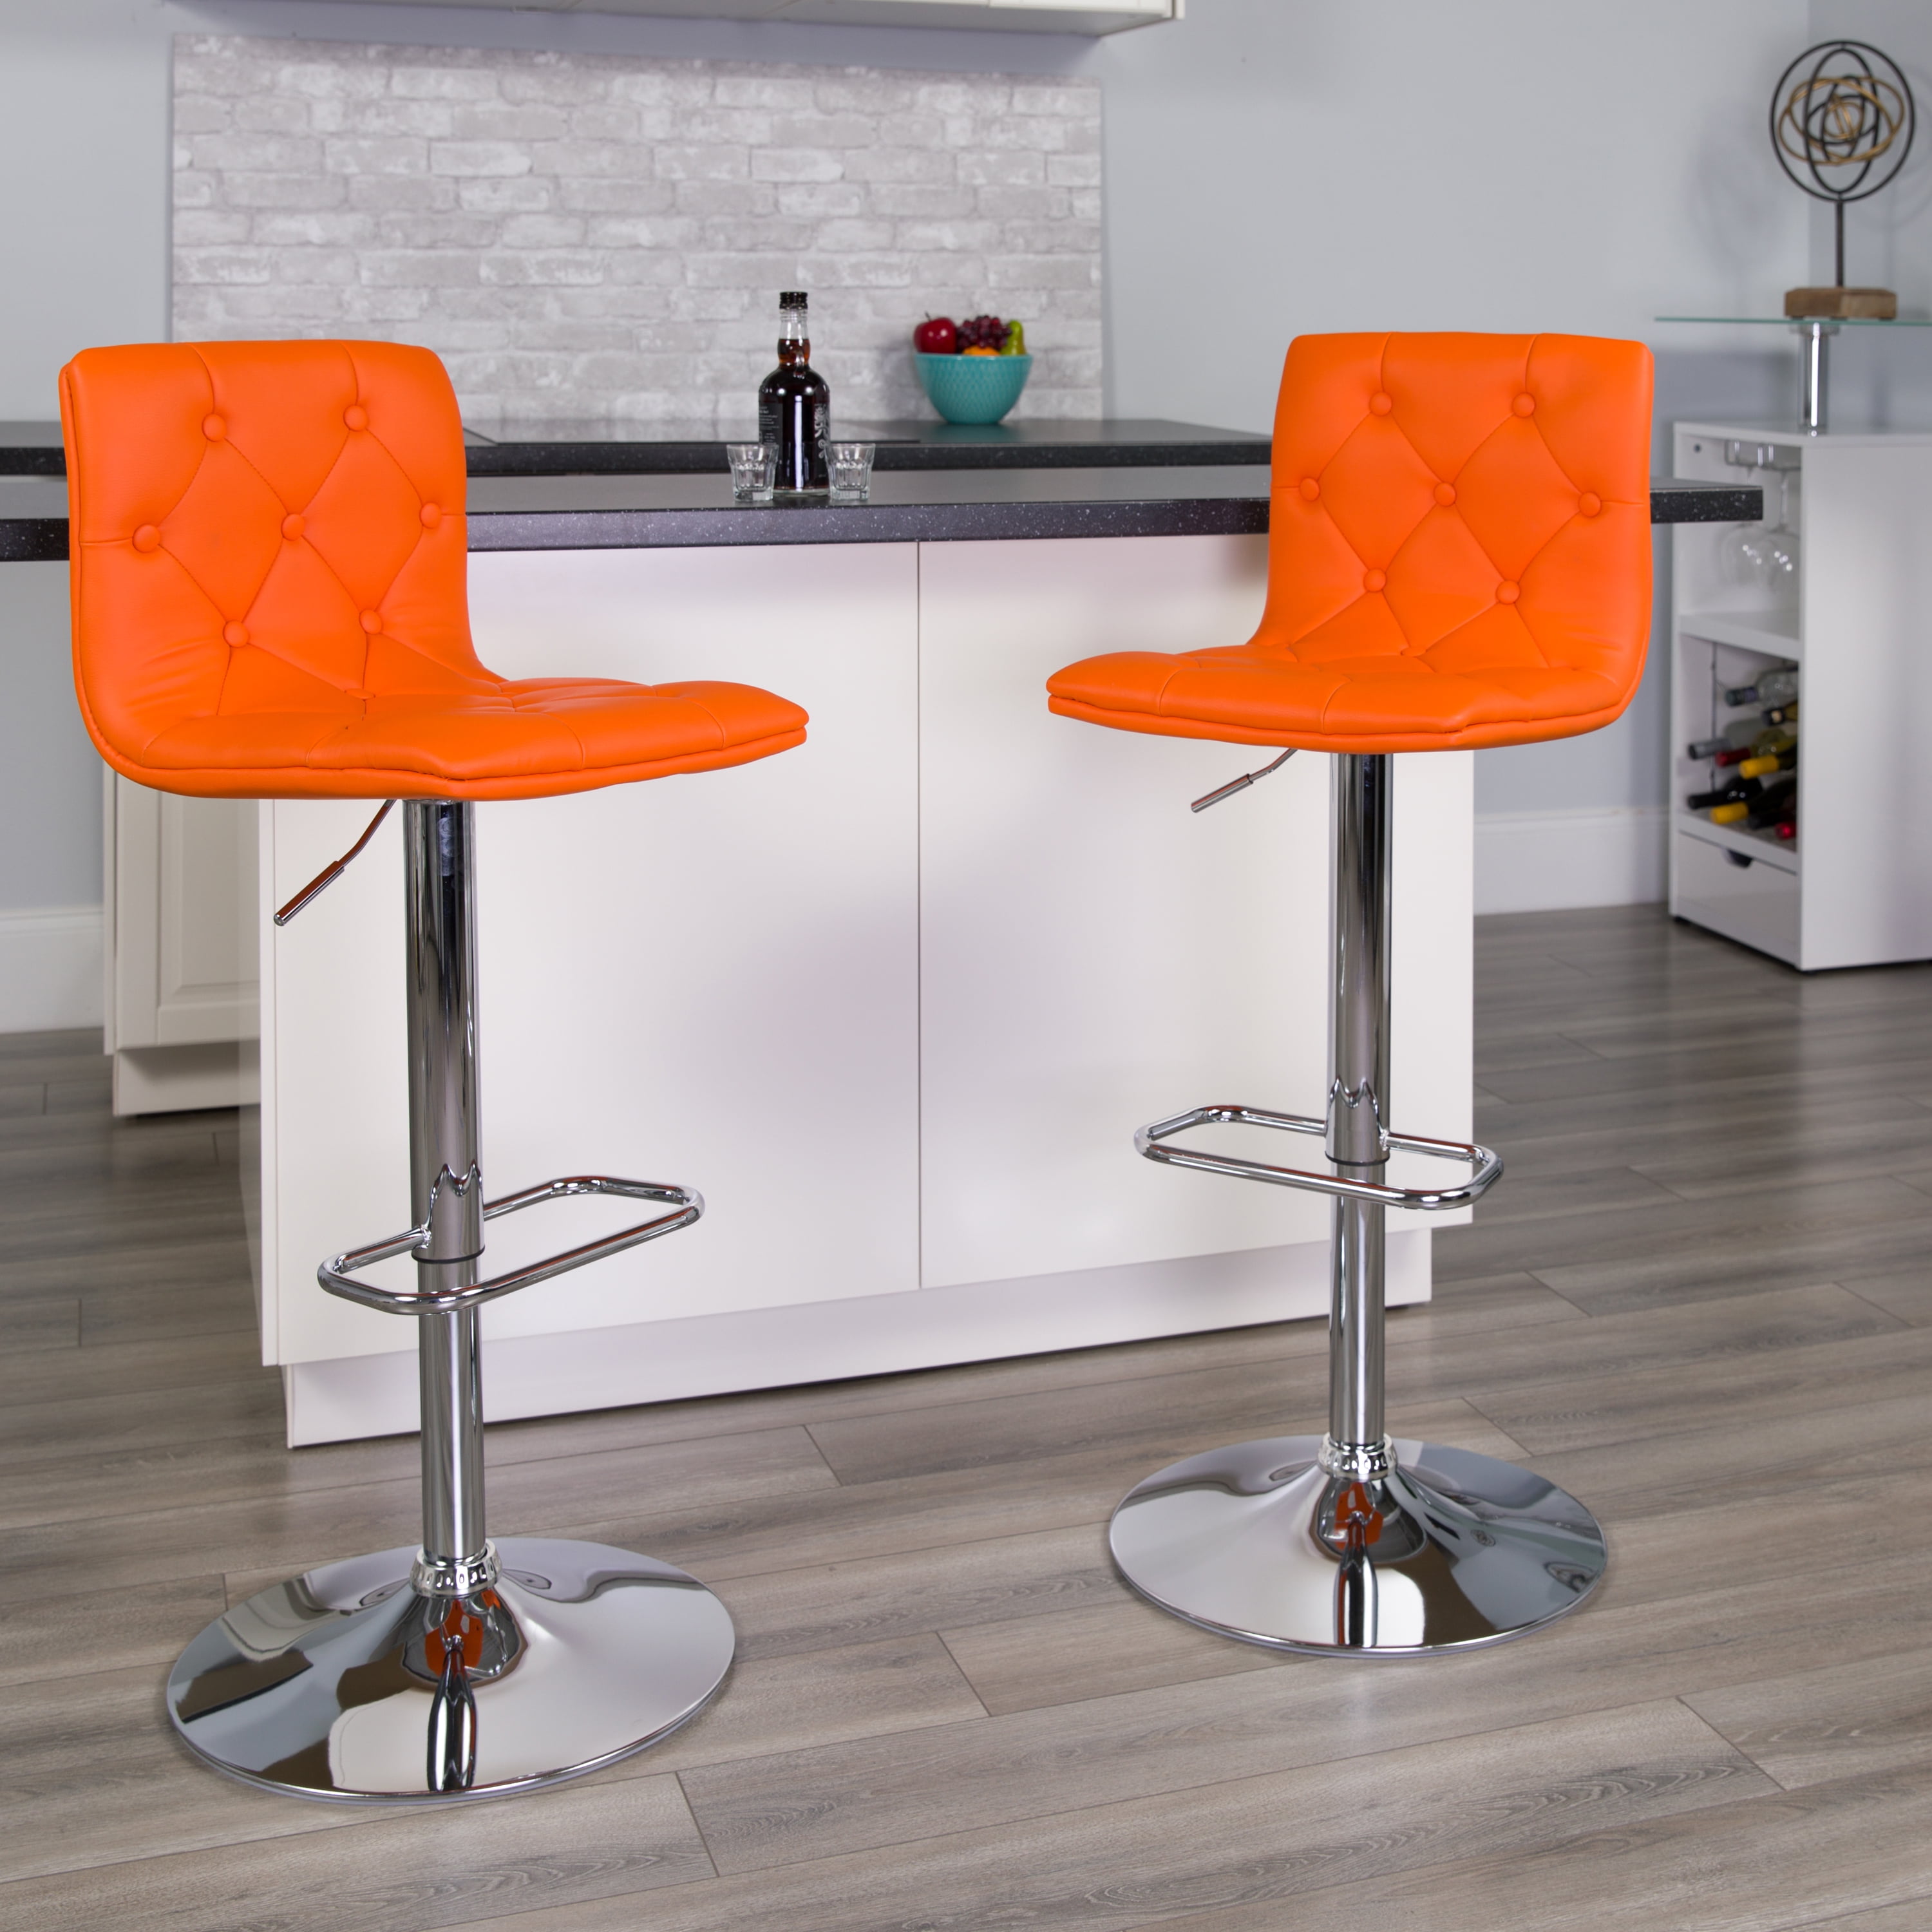 Contemporary Tufted Orange Vinyl Adjustable Height Bar Stool with Chrome Base 